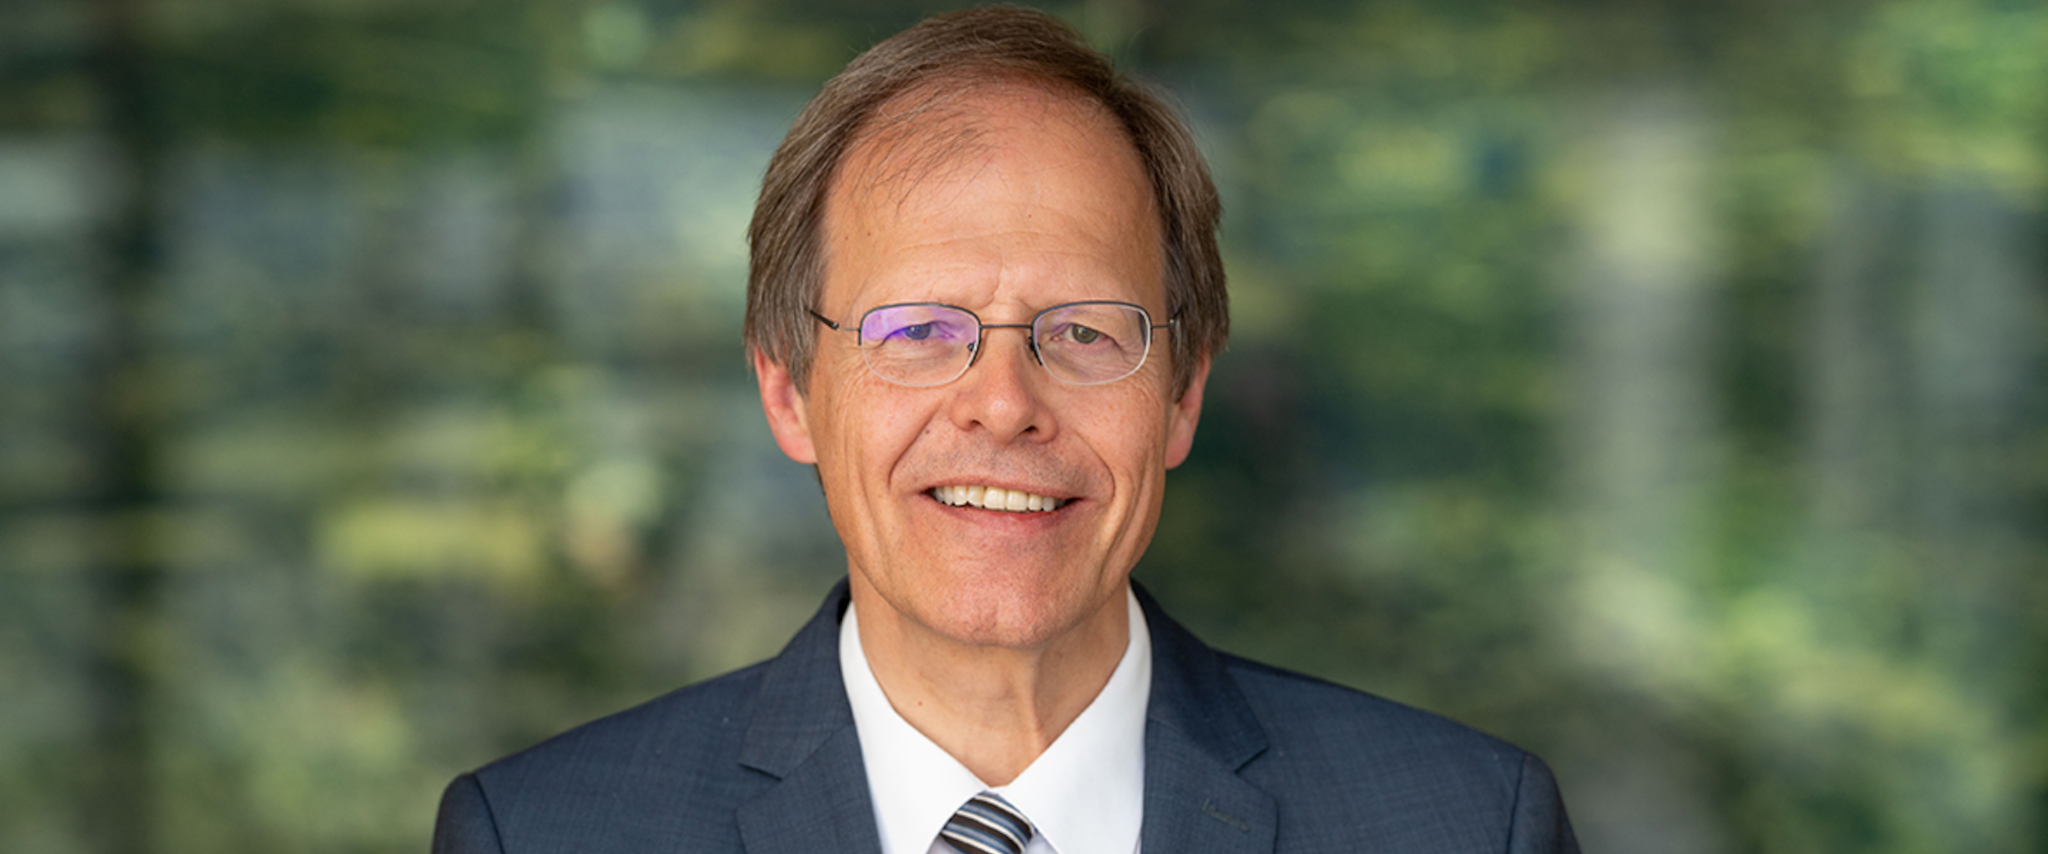 Prof. Wolfgang Holzgreve zum Chair des World Health Executive Forum gewählt